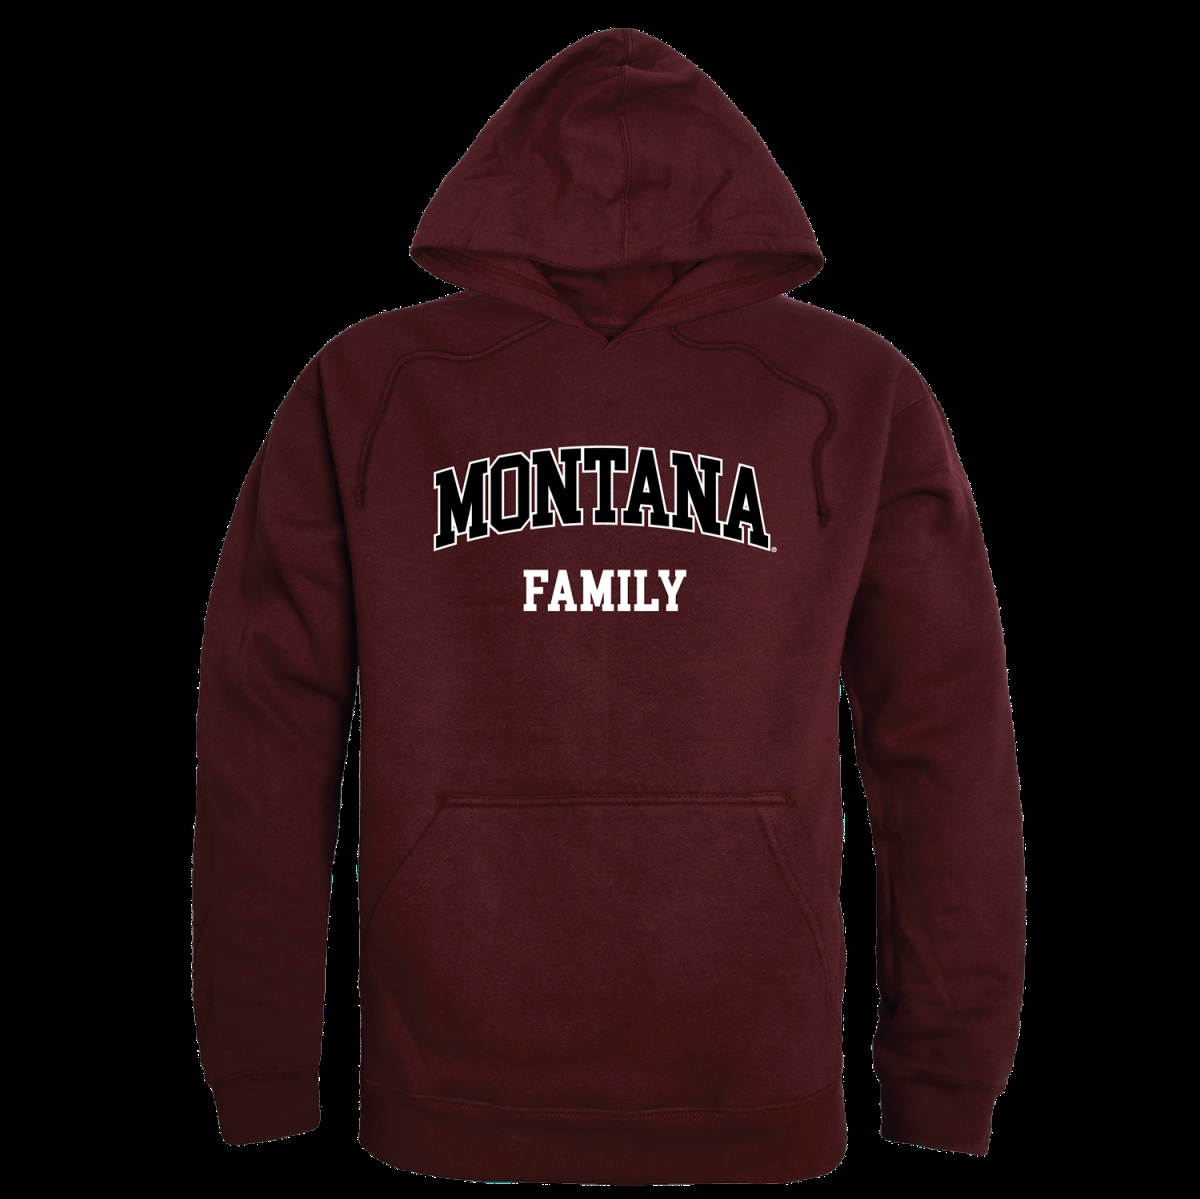 W Republic 573-191-MAR-02 Montana State University Grizzlies Family Hoodie&#44; Maroon - Medium